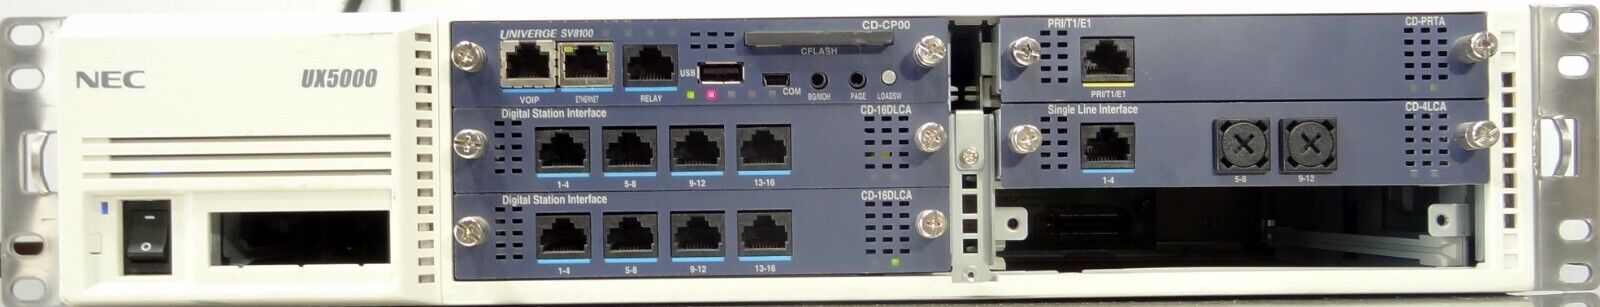 NEC CHS2U-US SV8100/SV8300 w/ CD-CP00, 2x(CD-16DLCA), CD-PRTA, CD-4LCA Modules